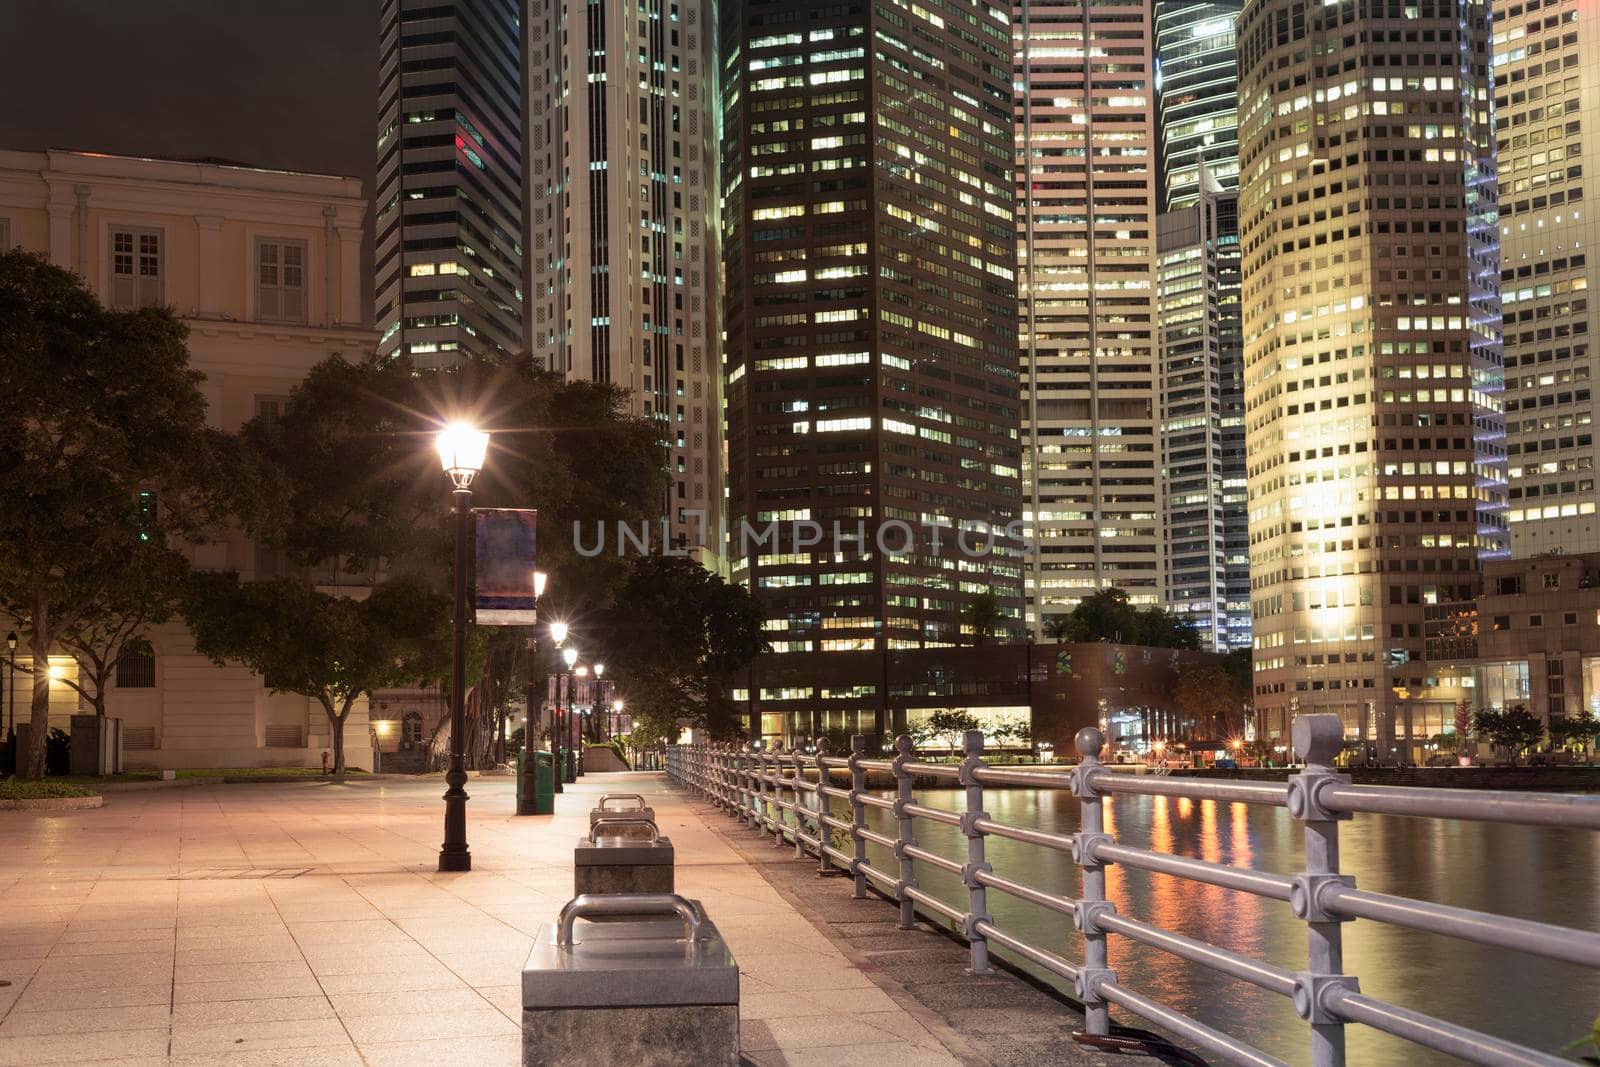 night illumination on river embankment in Singapore downtown